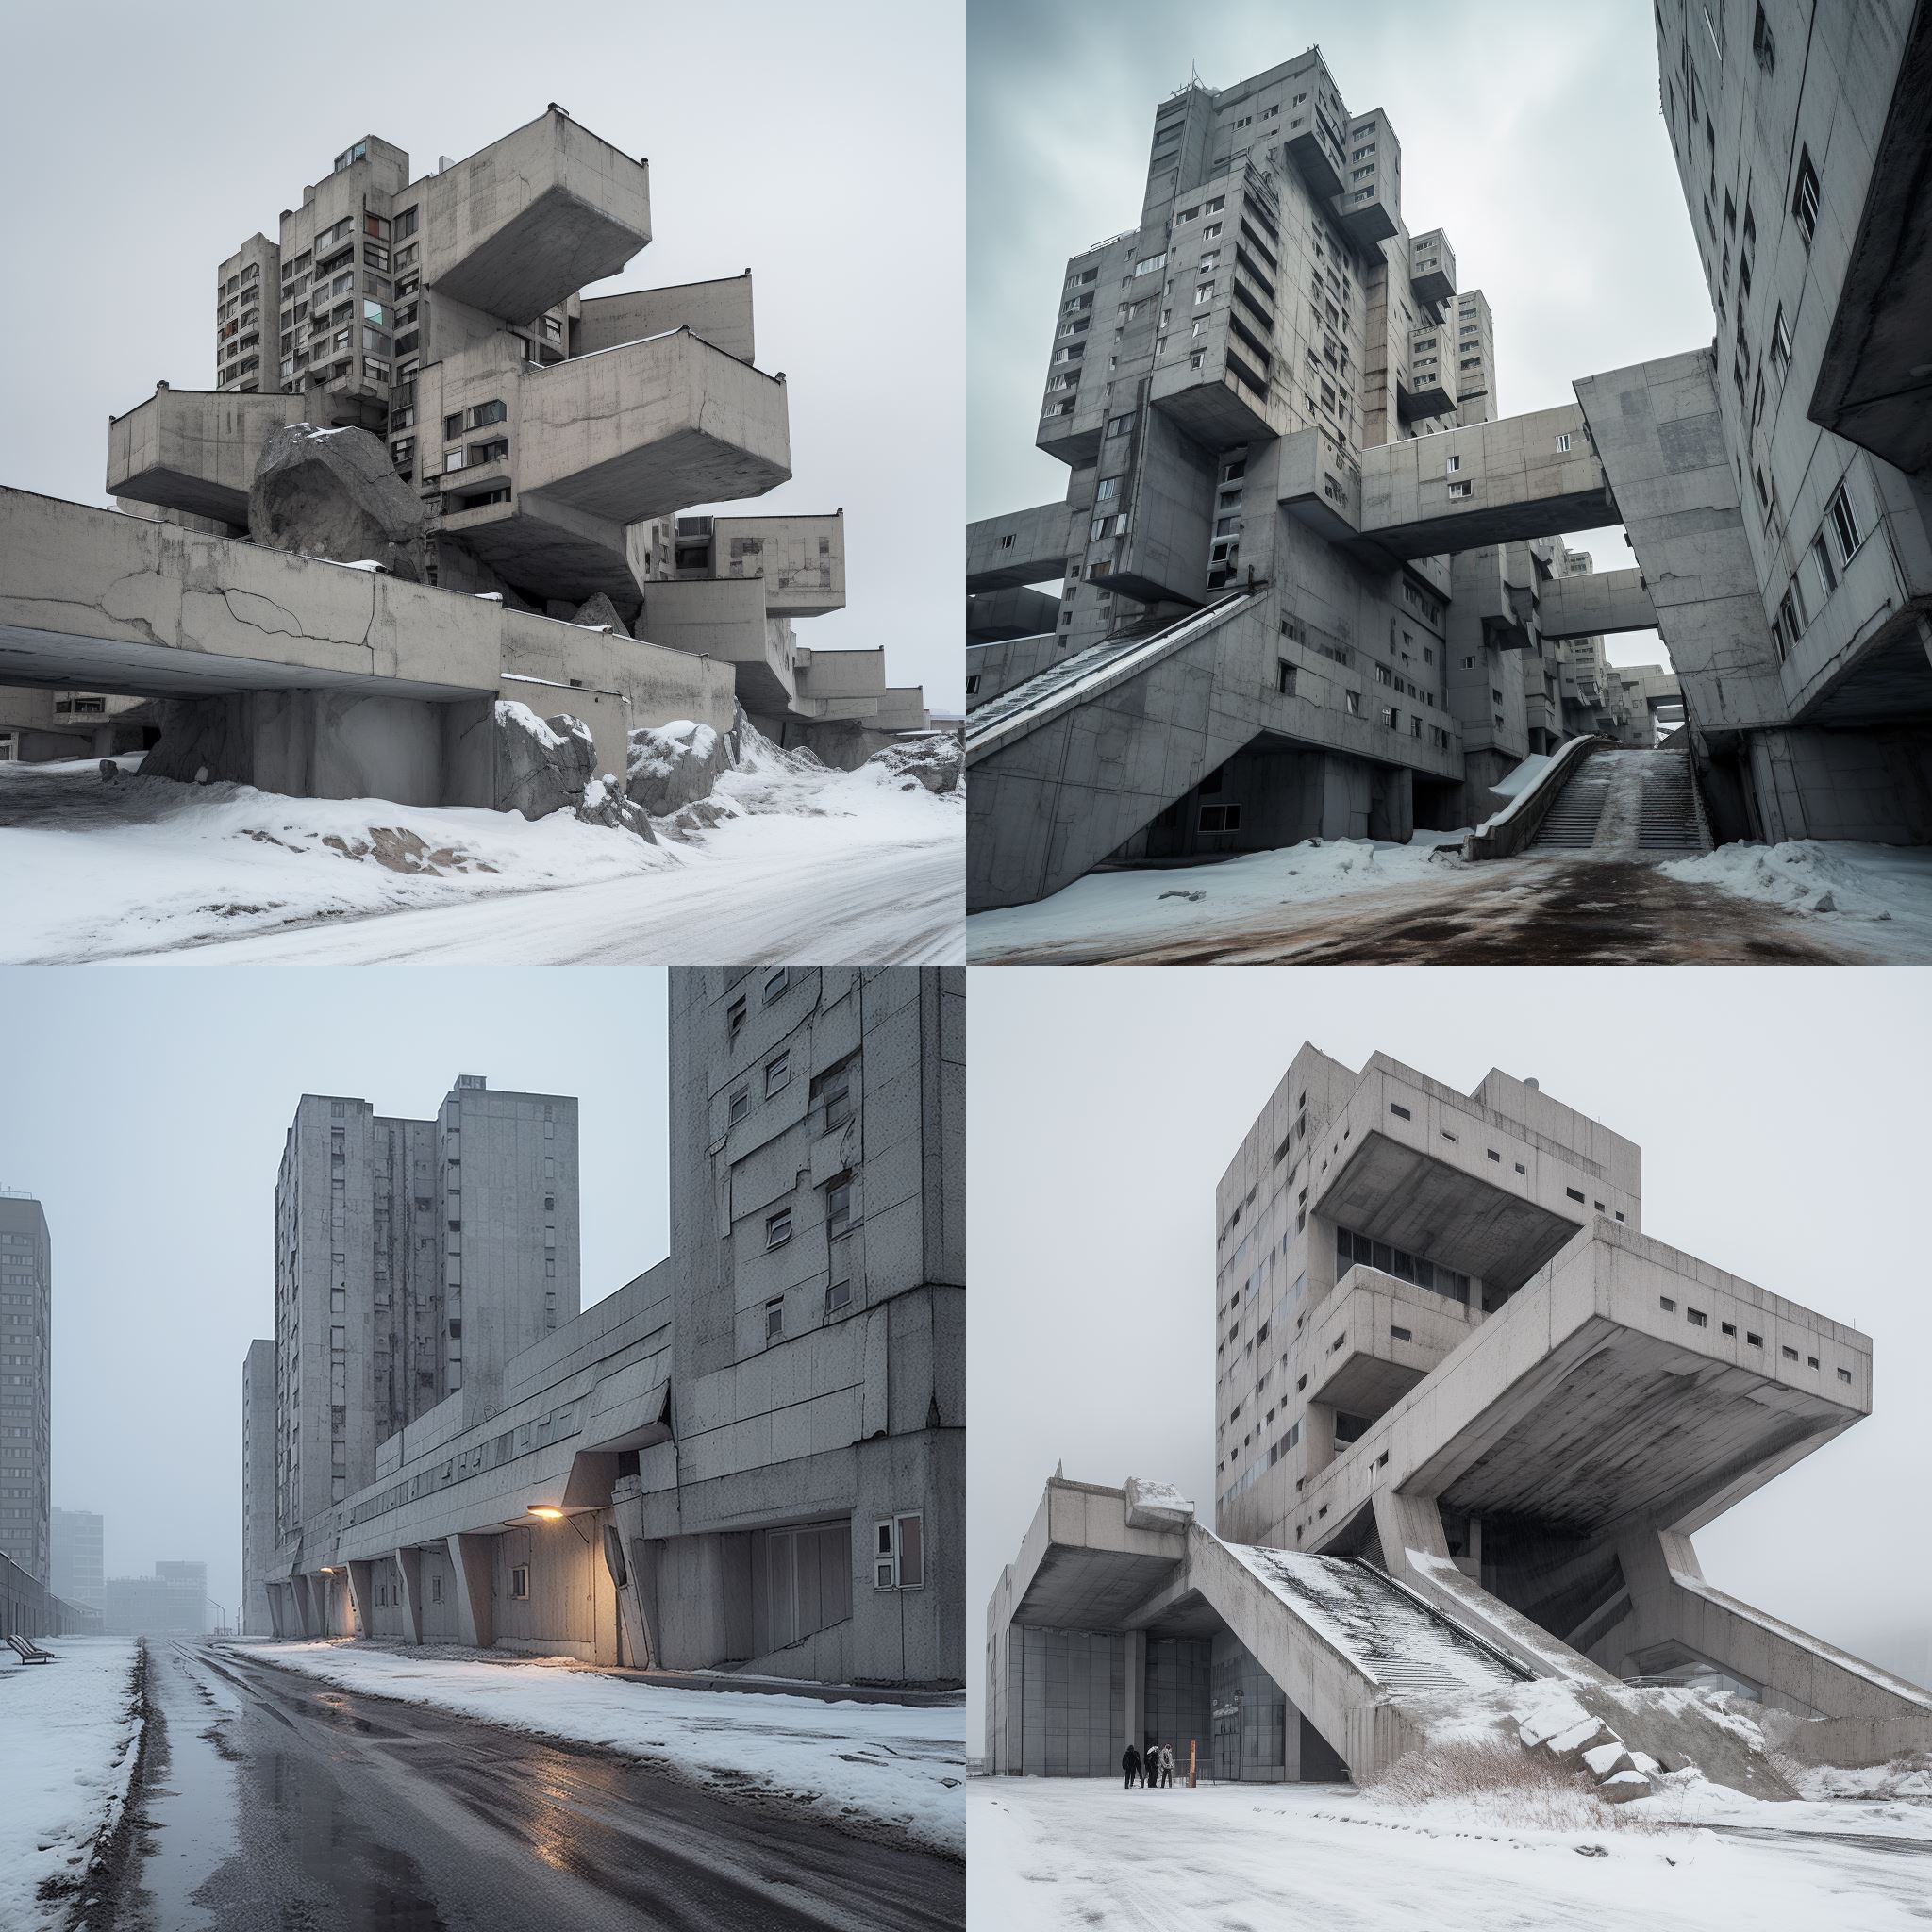 Architecture brutaliste à Norilsk